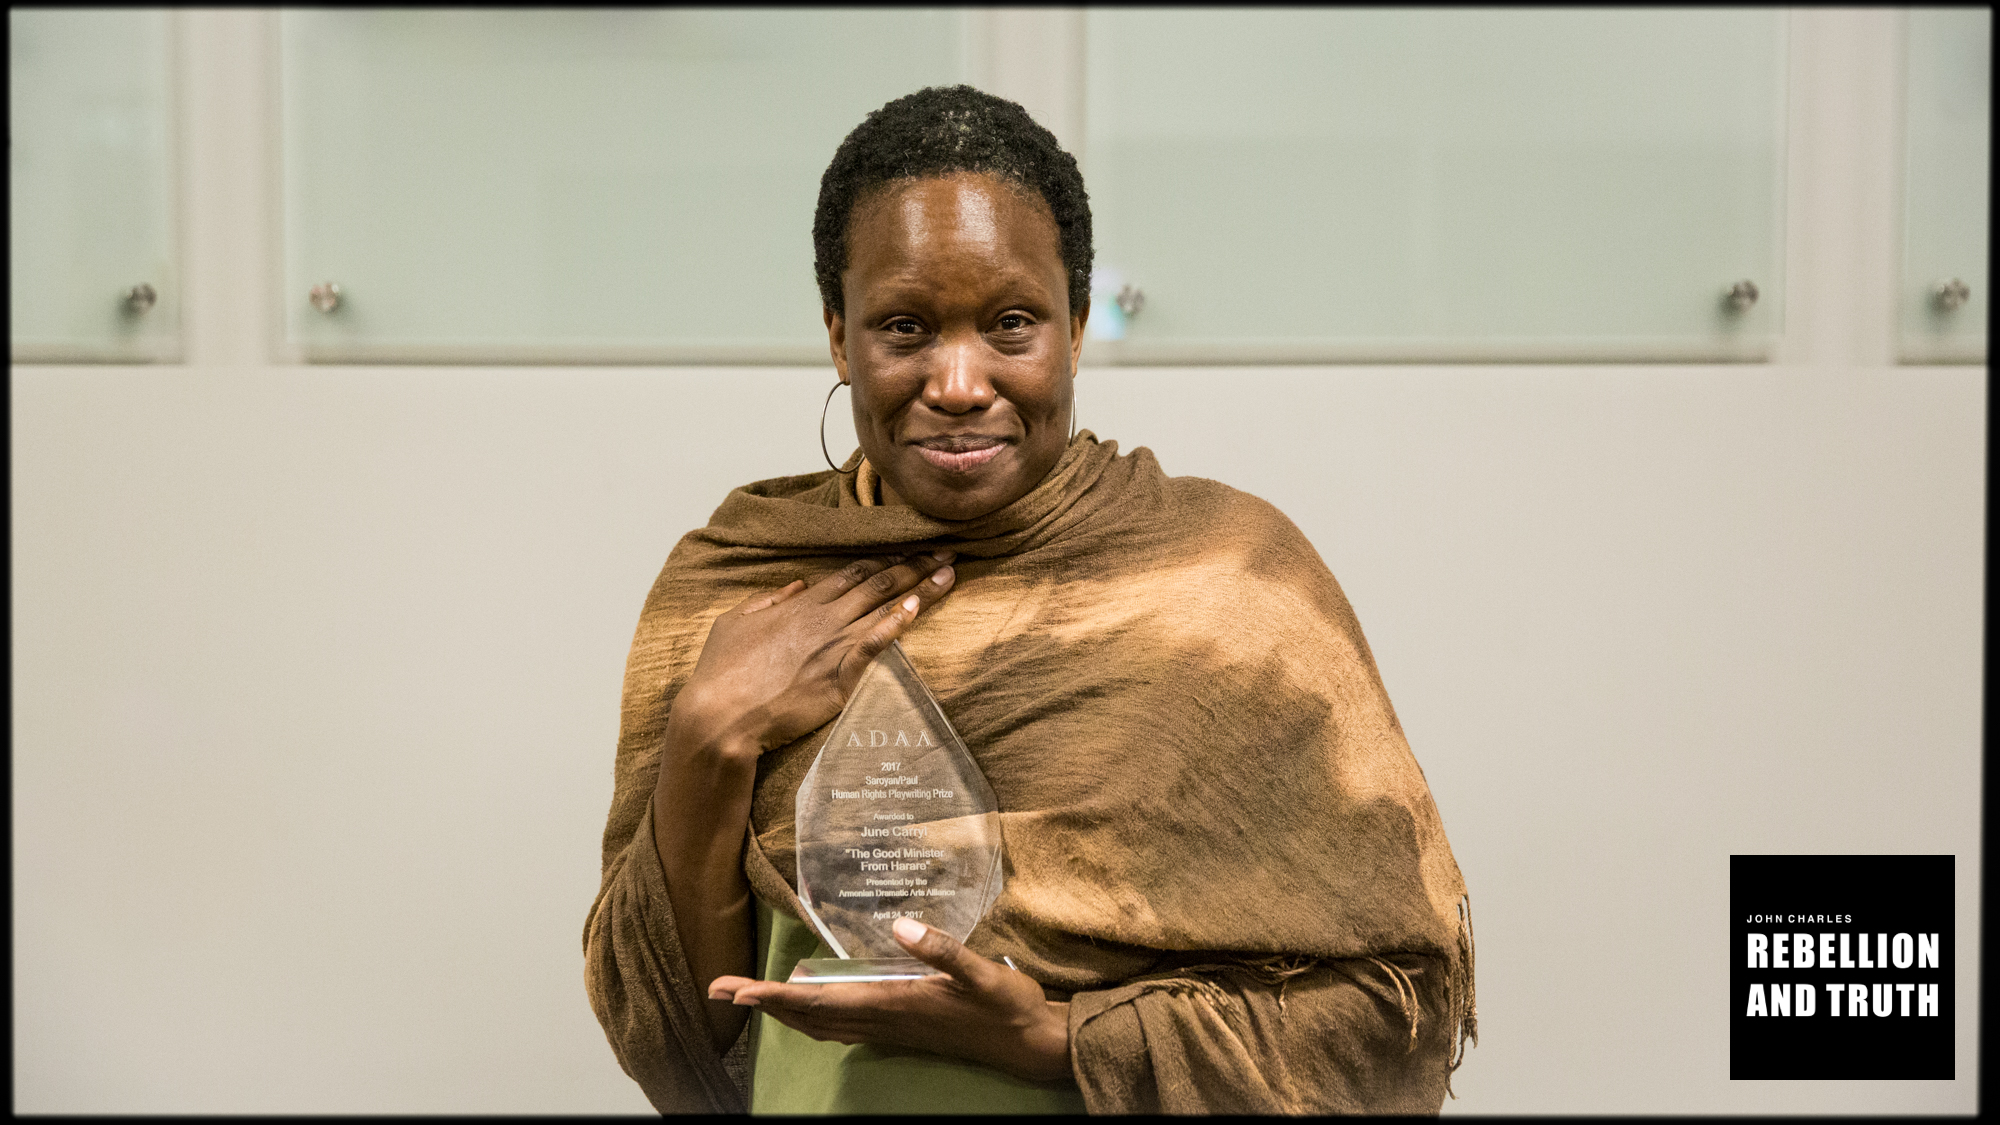 ADAA’s Saroyan/Paul $10,000 human rights playwriting prize winner: June Carryl